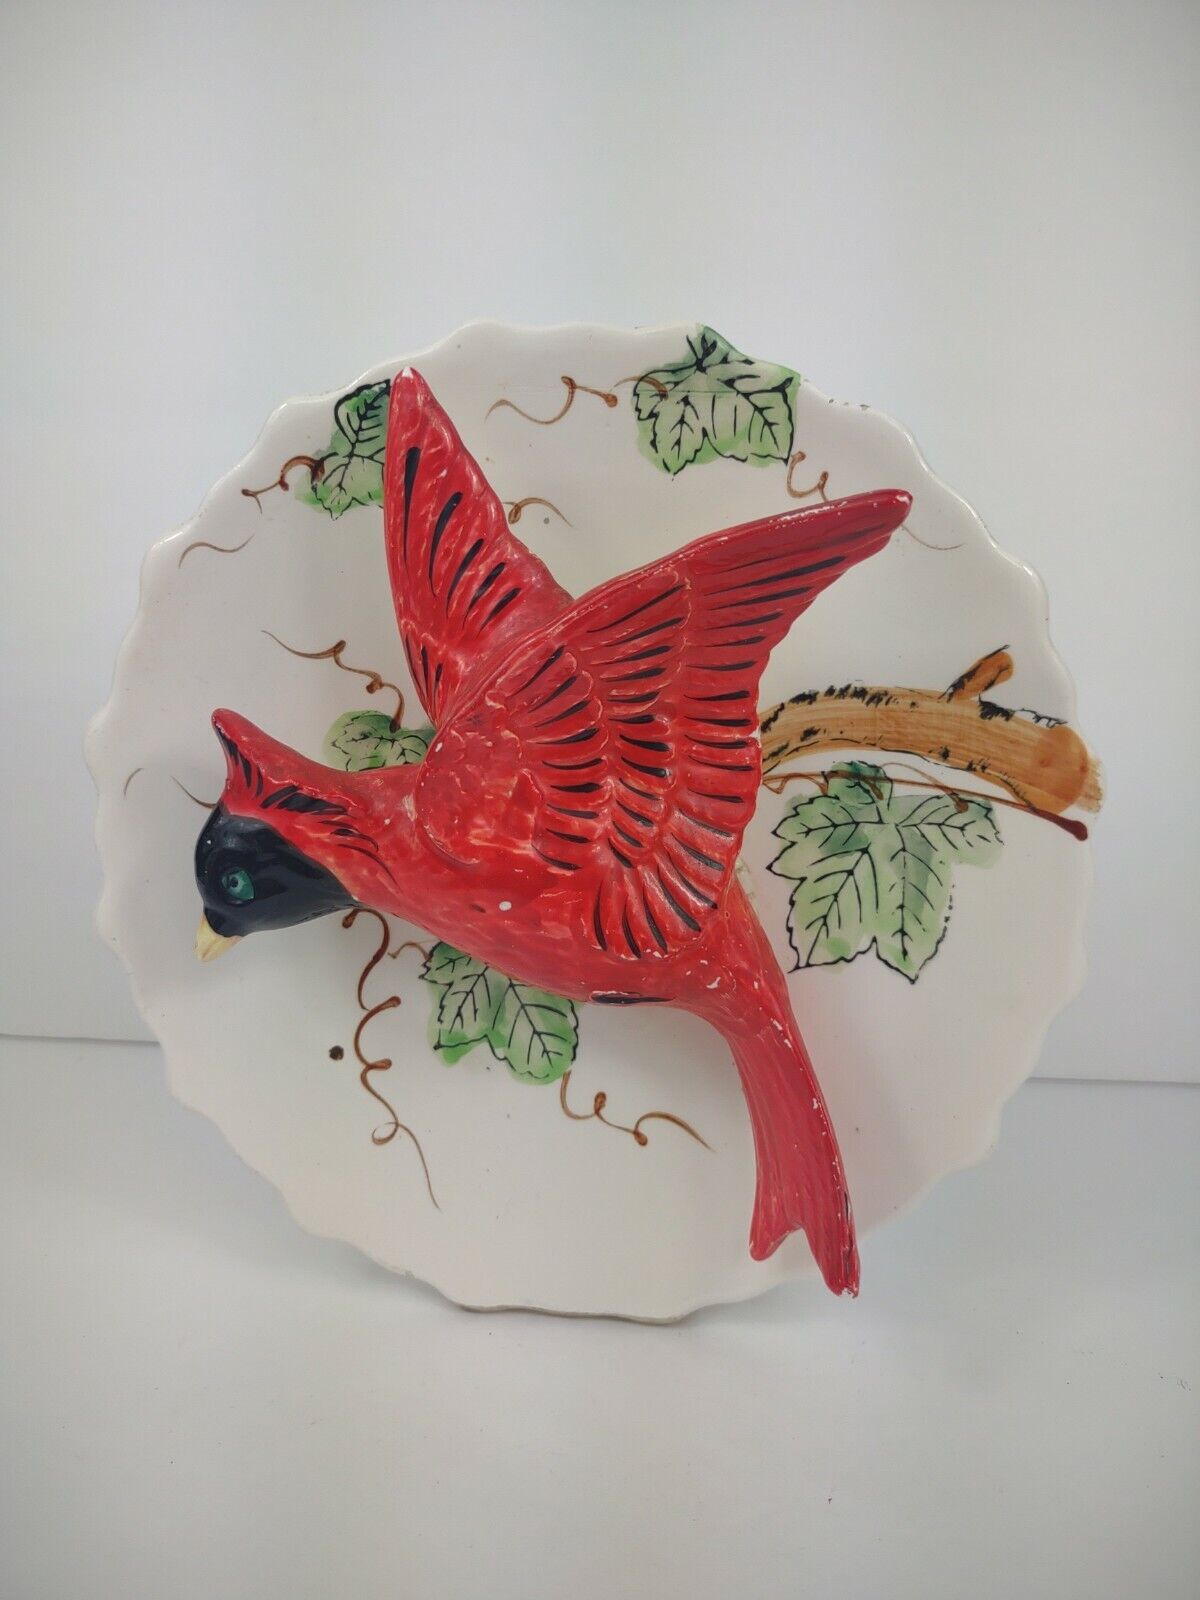 Vintage Cardinal Wall Pocket Vase Ceramic 3d Red Bird Table planter hanging